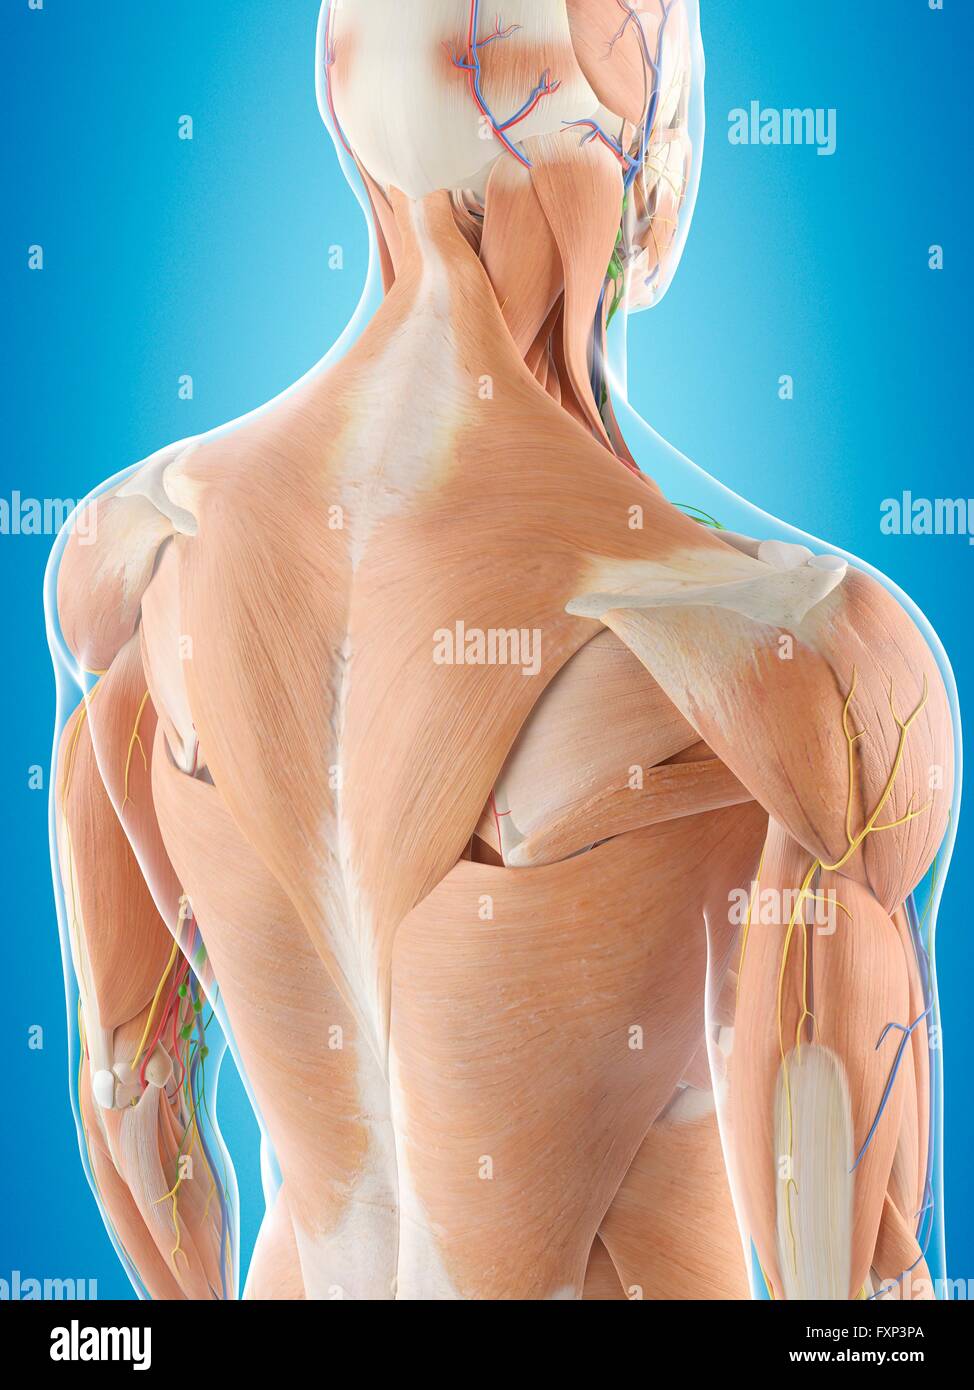 https://c8.alamy.com/compes/fxp3pa/anatomia-de-la-espalda-humana-equipo-de-ilustracion-fxp3pa.jpg